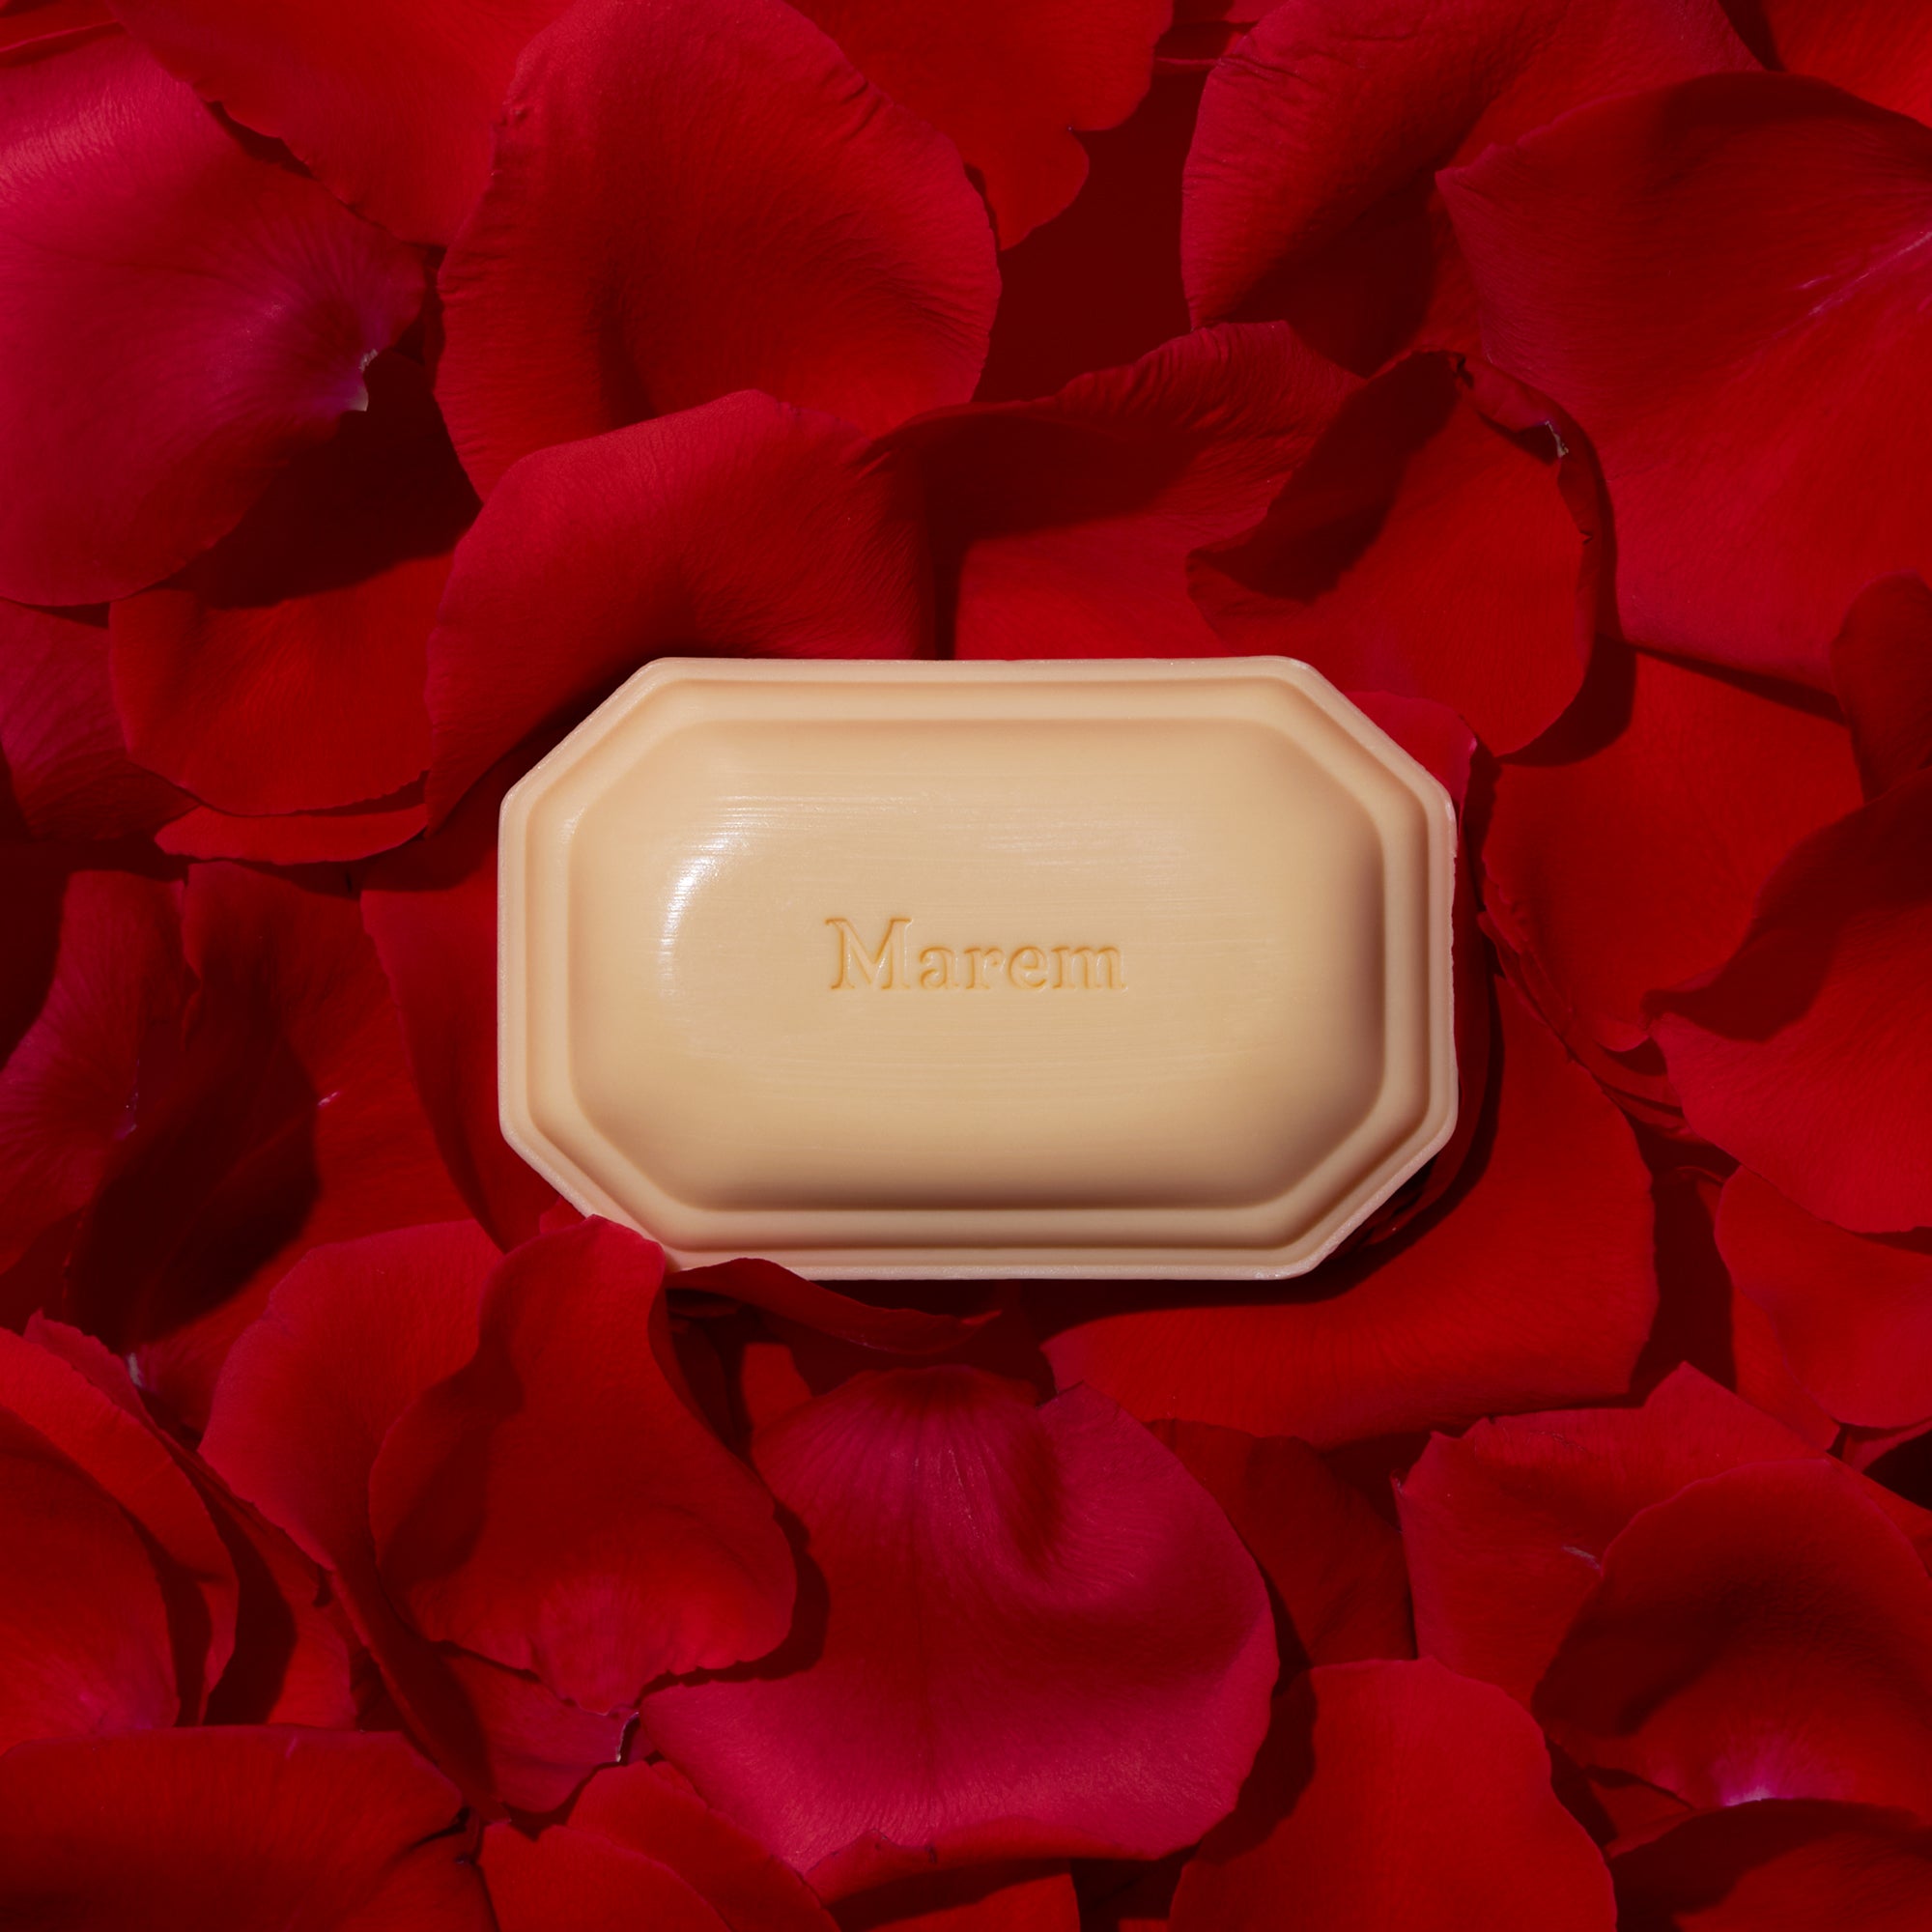 Caswell-Massey Marem Luxury Bath Soap on top of crimson red rose petals